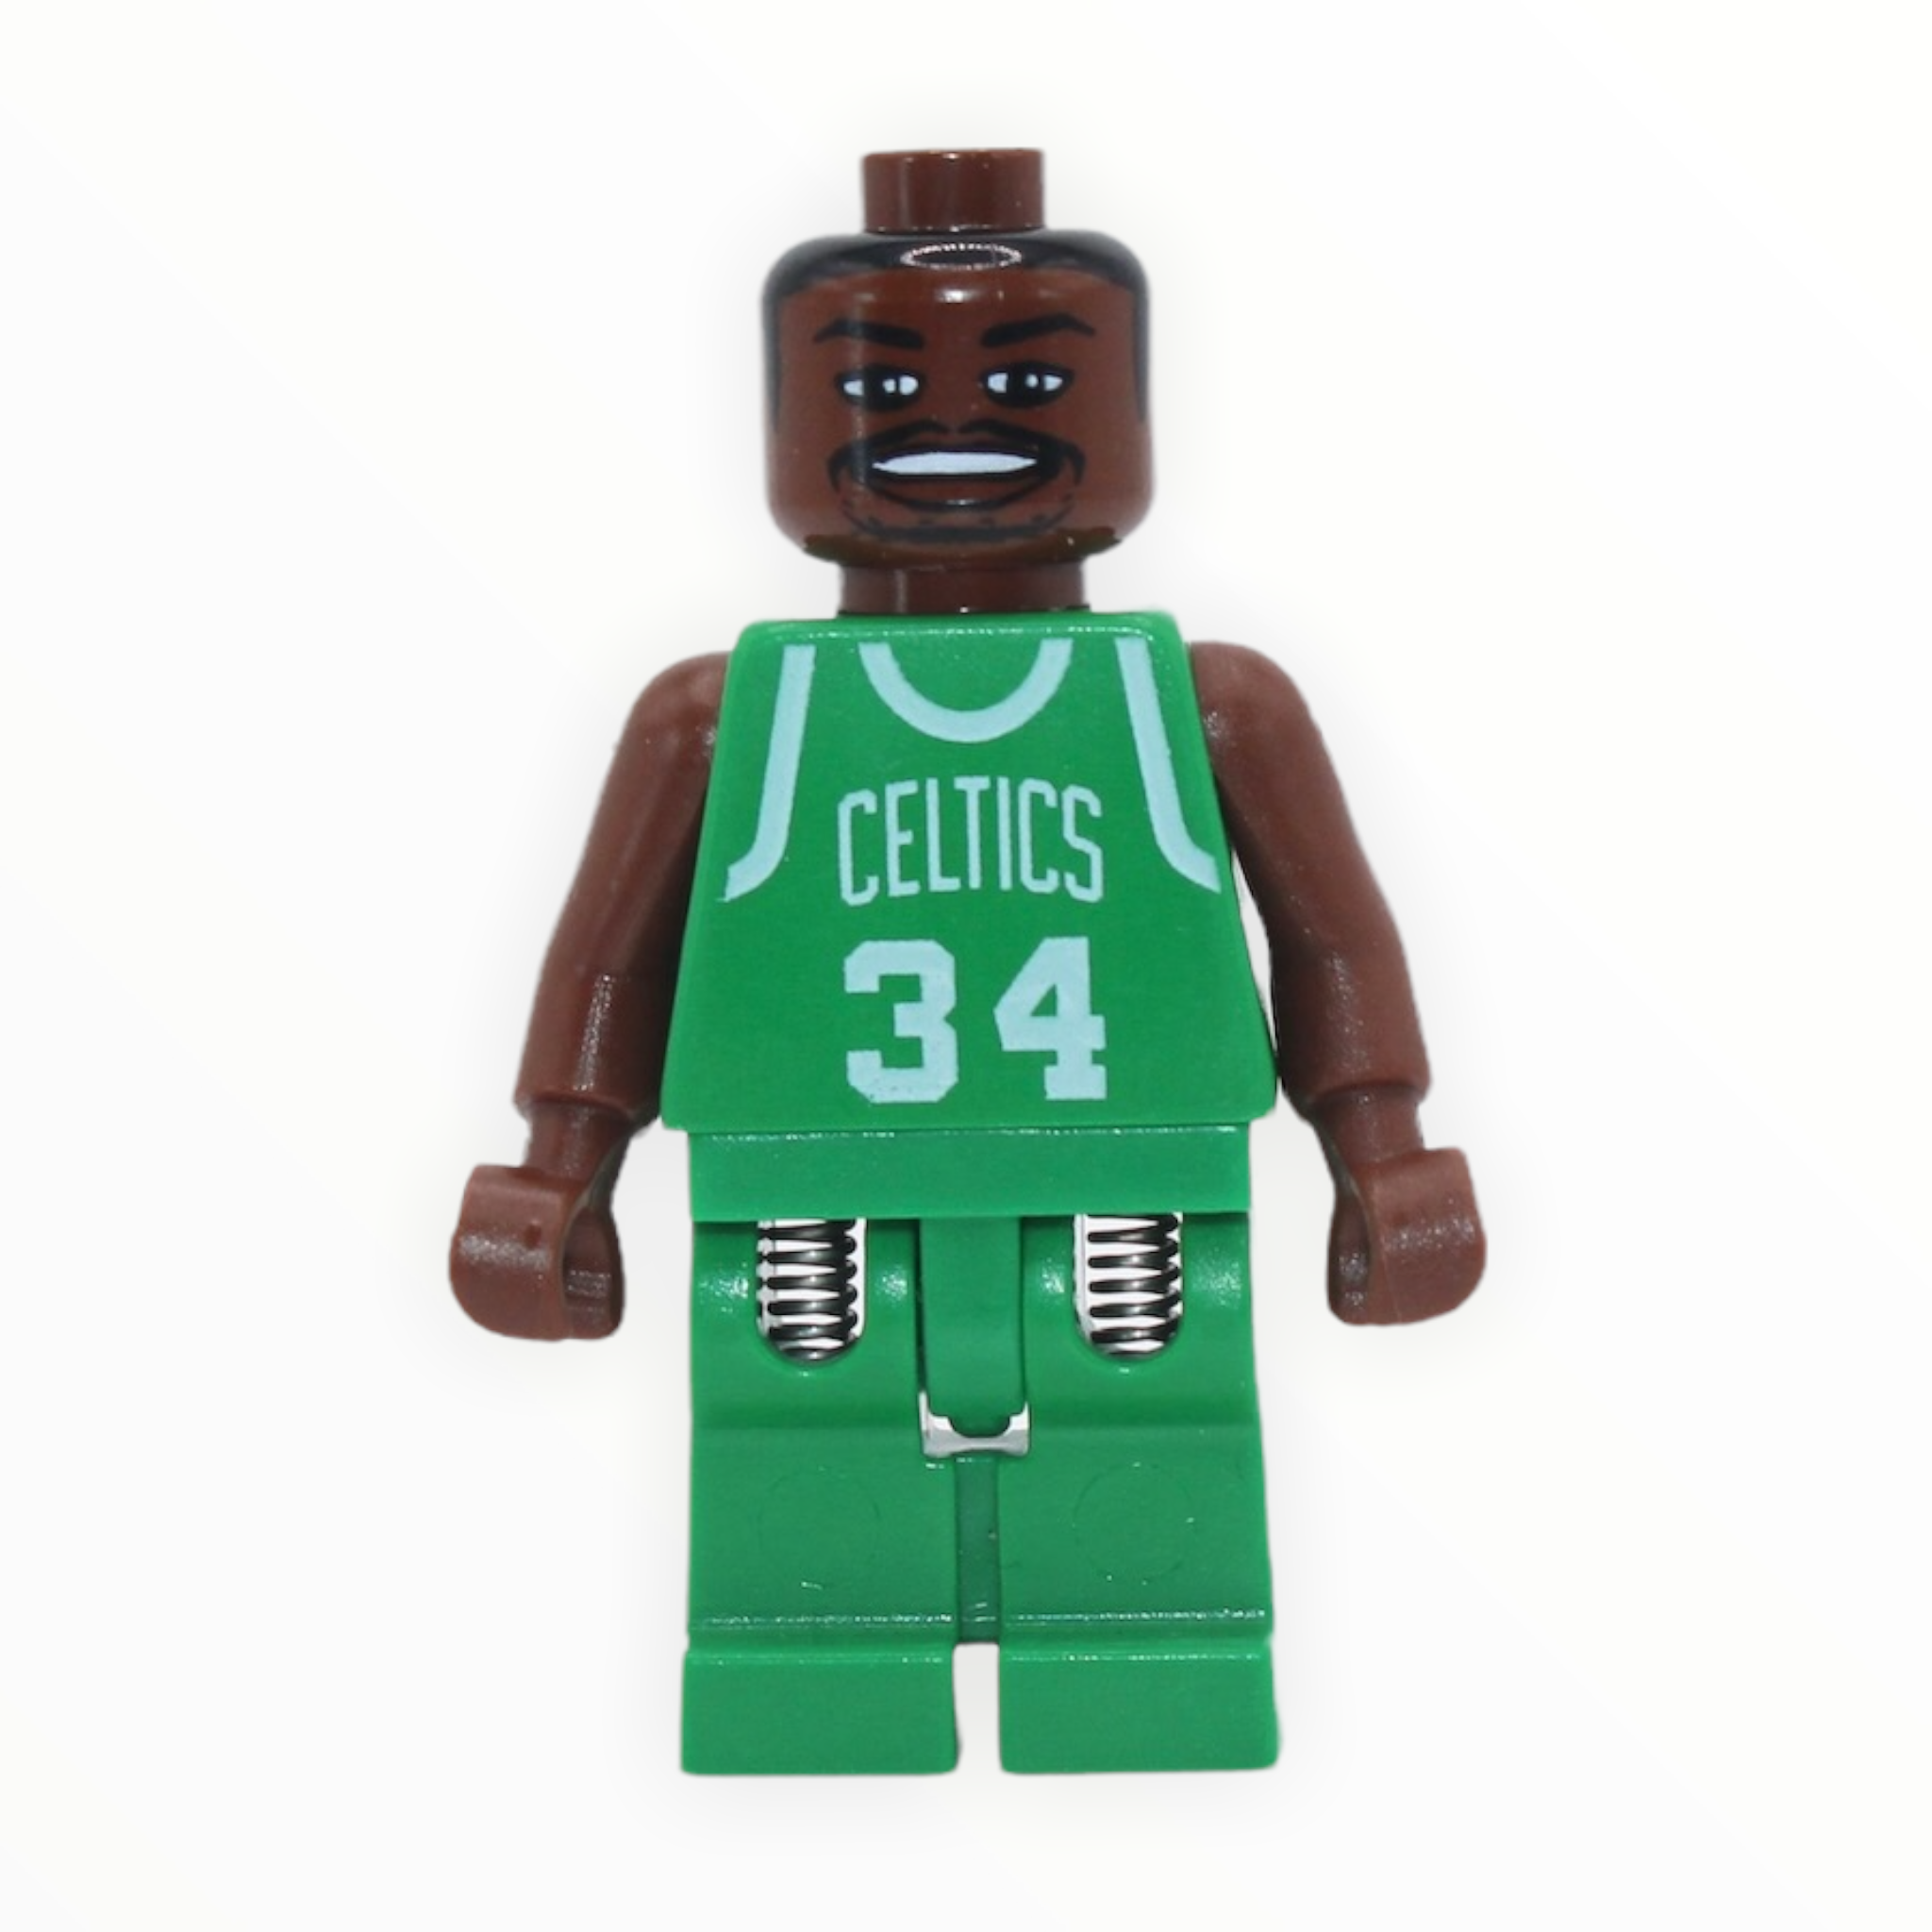 Paul Pierce - Boston Celtics #34